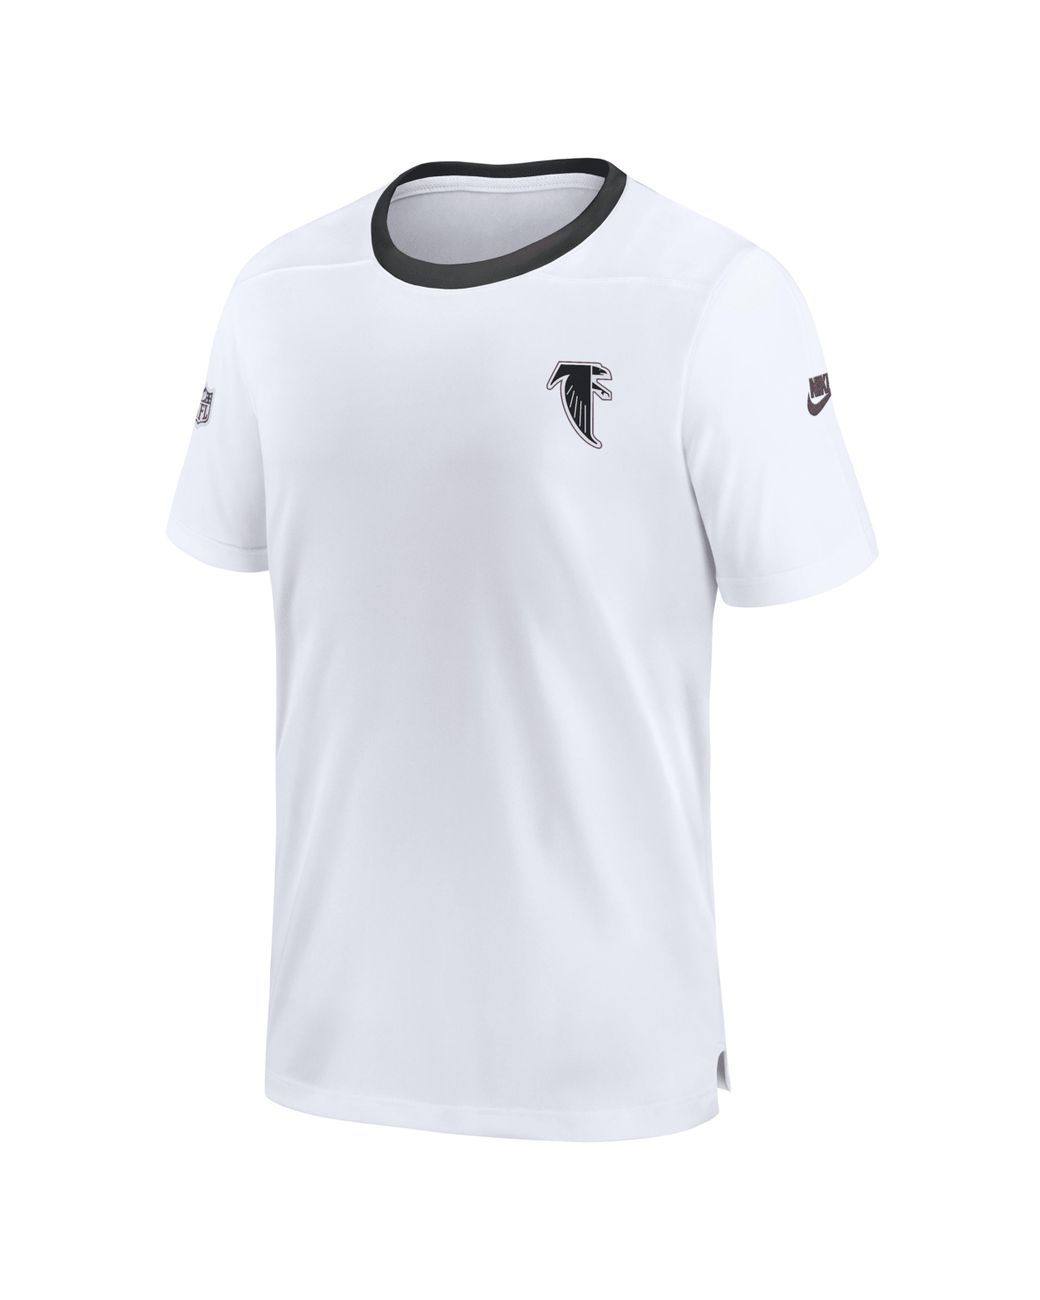 Nike Dri-fit Coach (nfl Atlanta Falcons) Top in White for Men